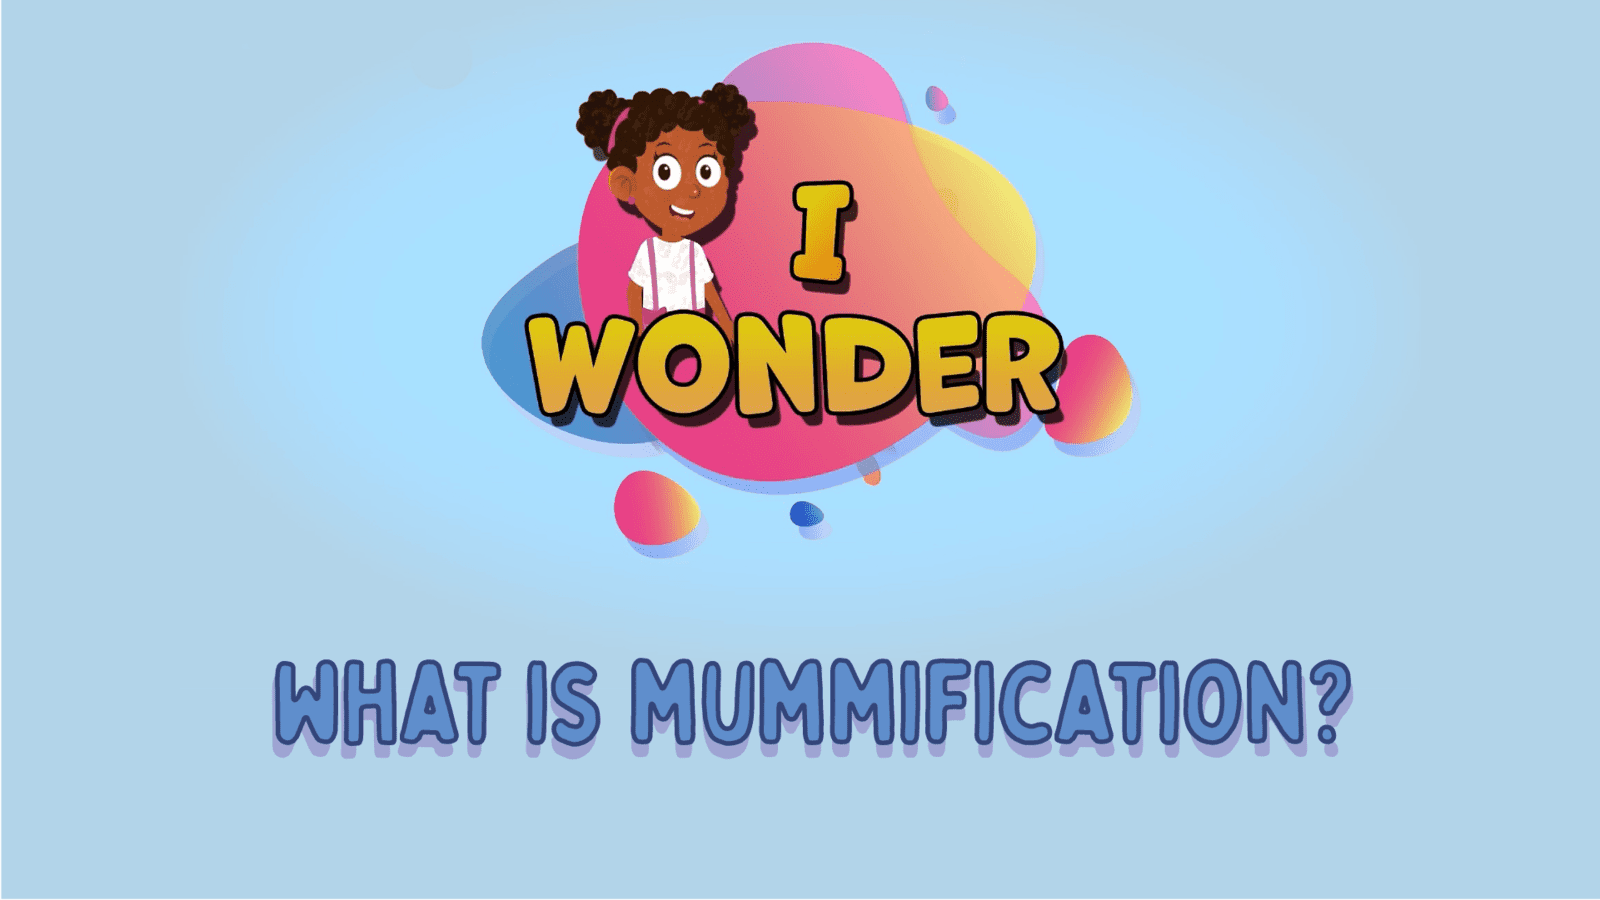 What Is Mummification?